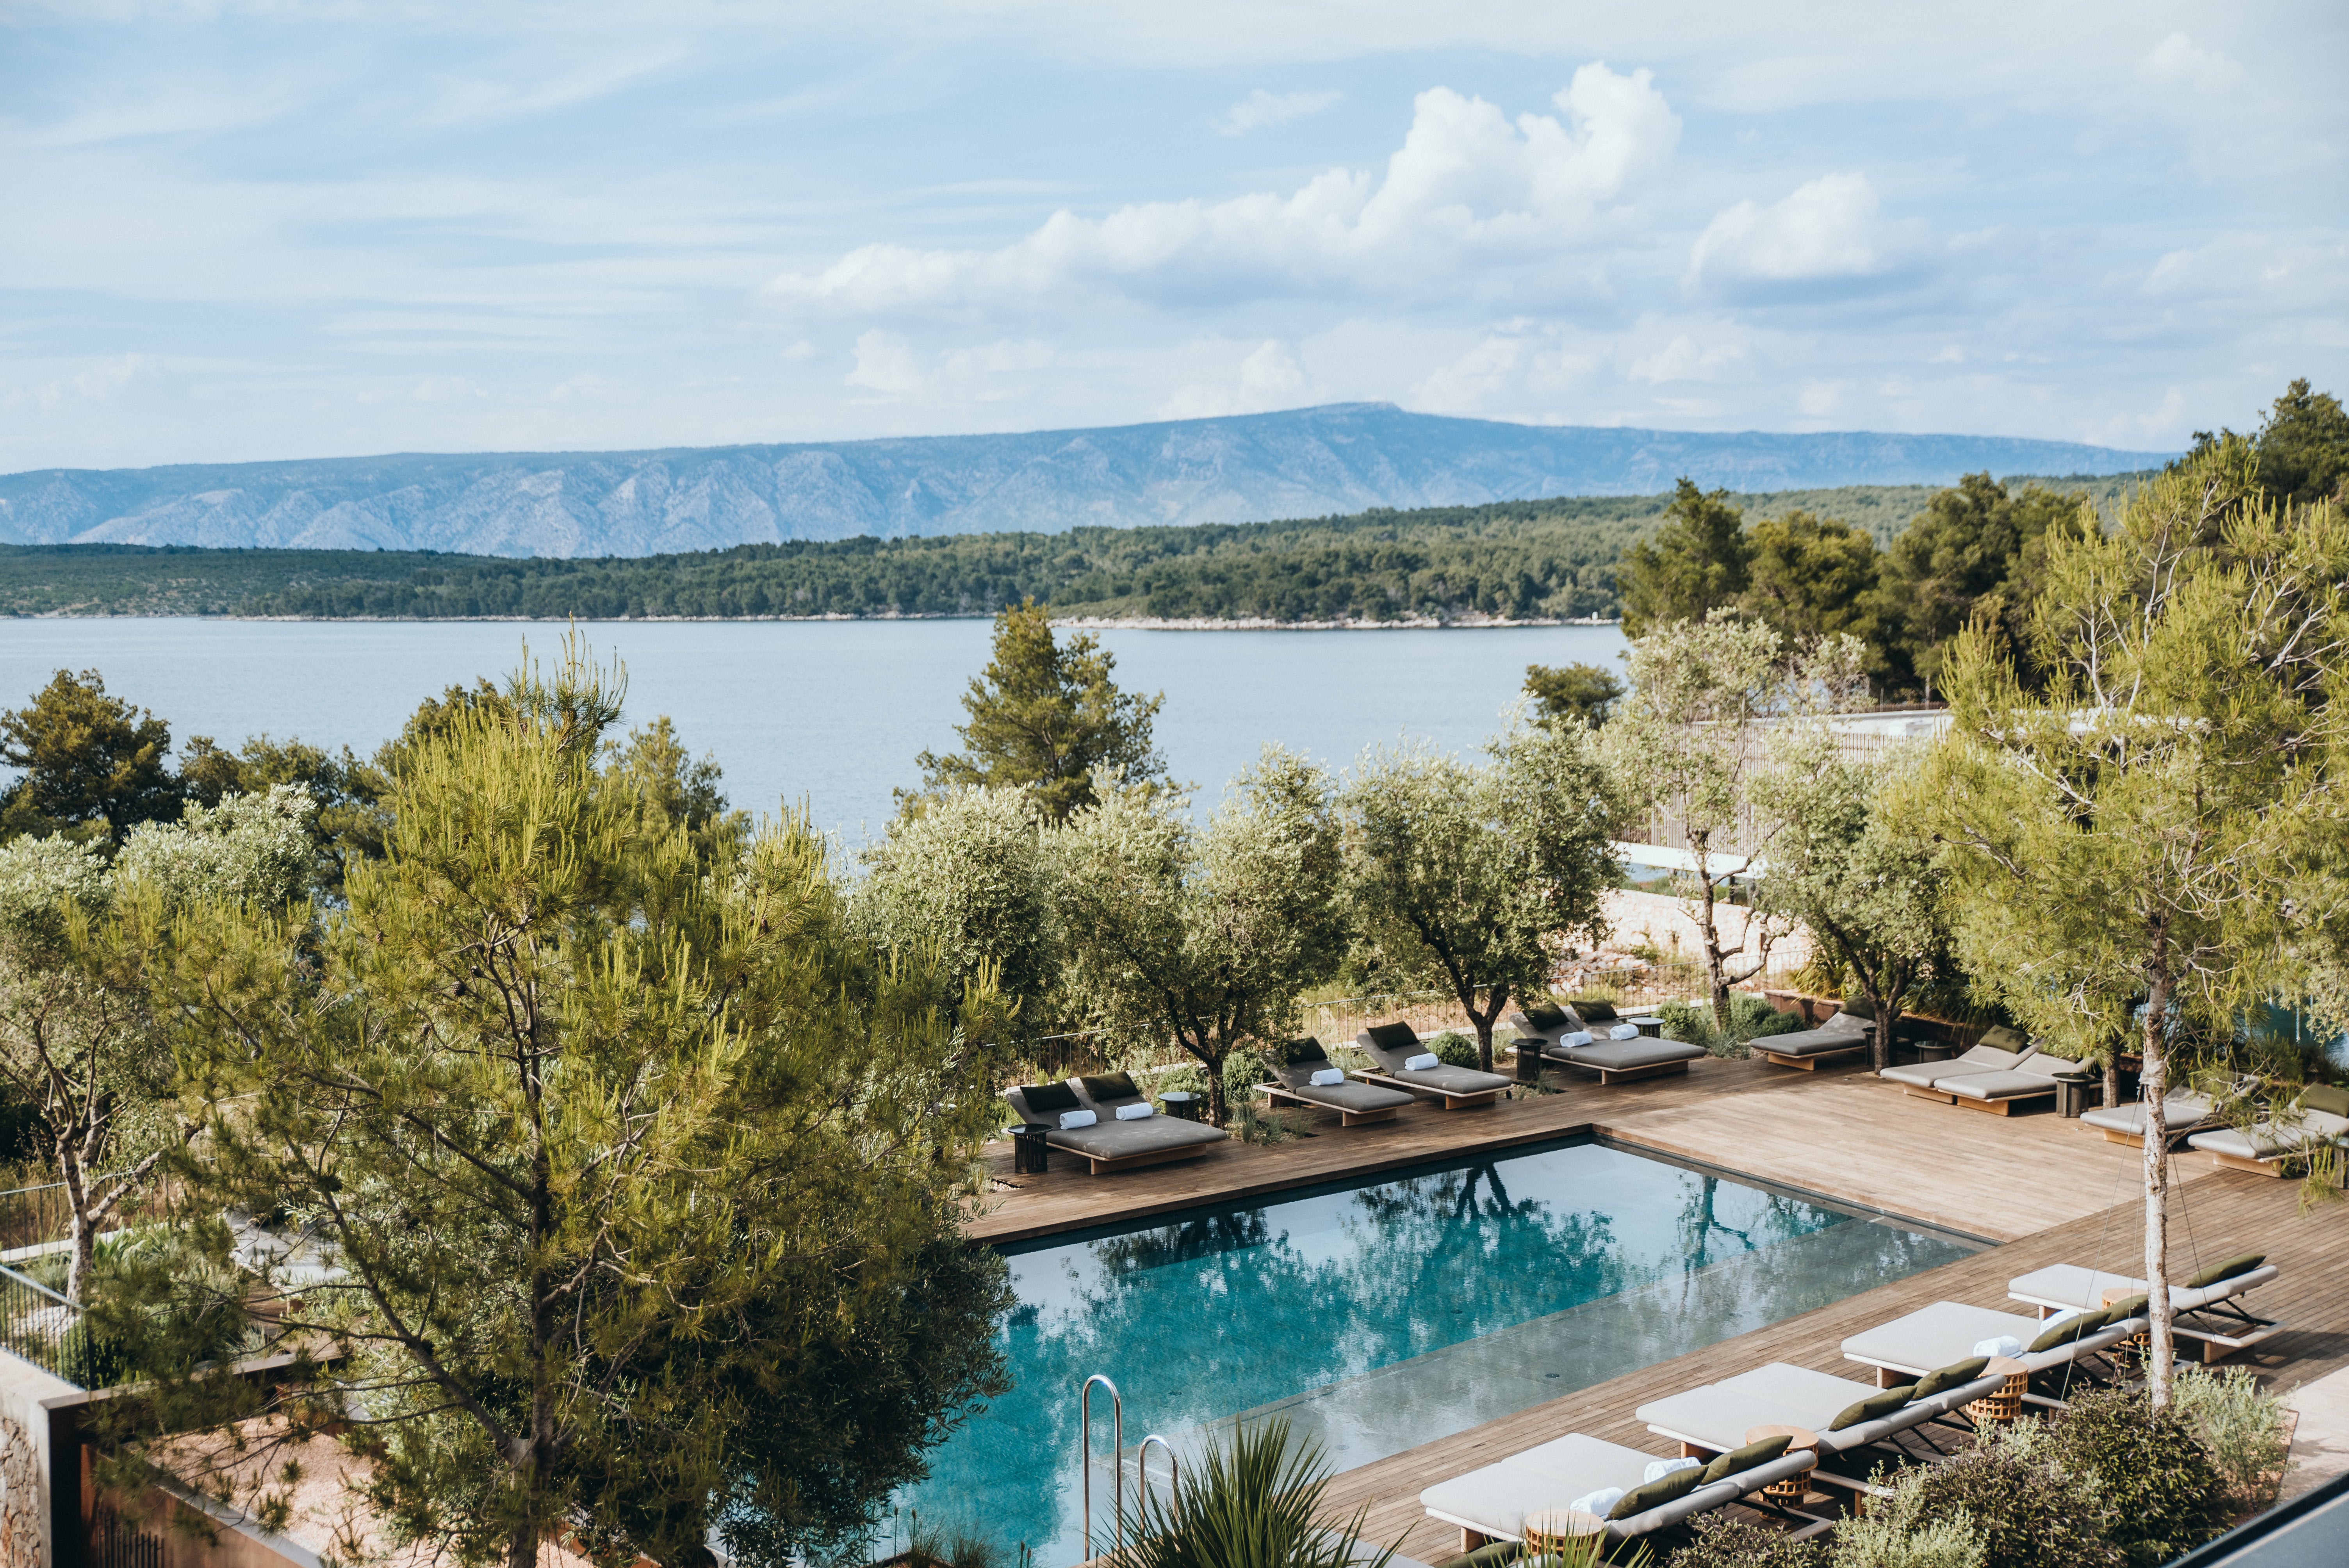 The pool at Maslina Resort, Croatia